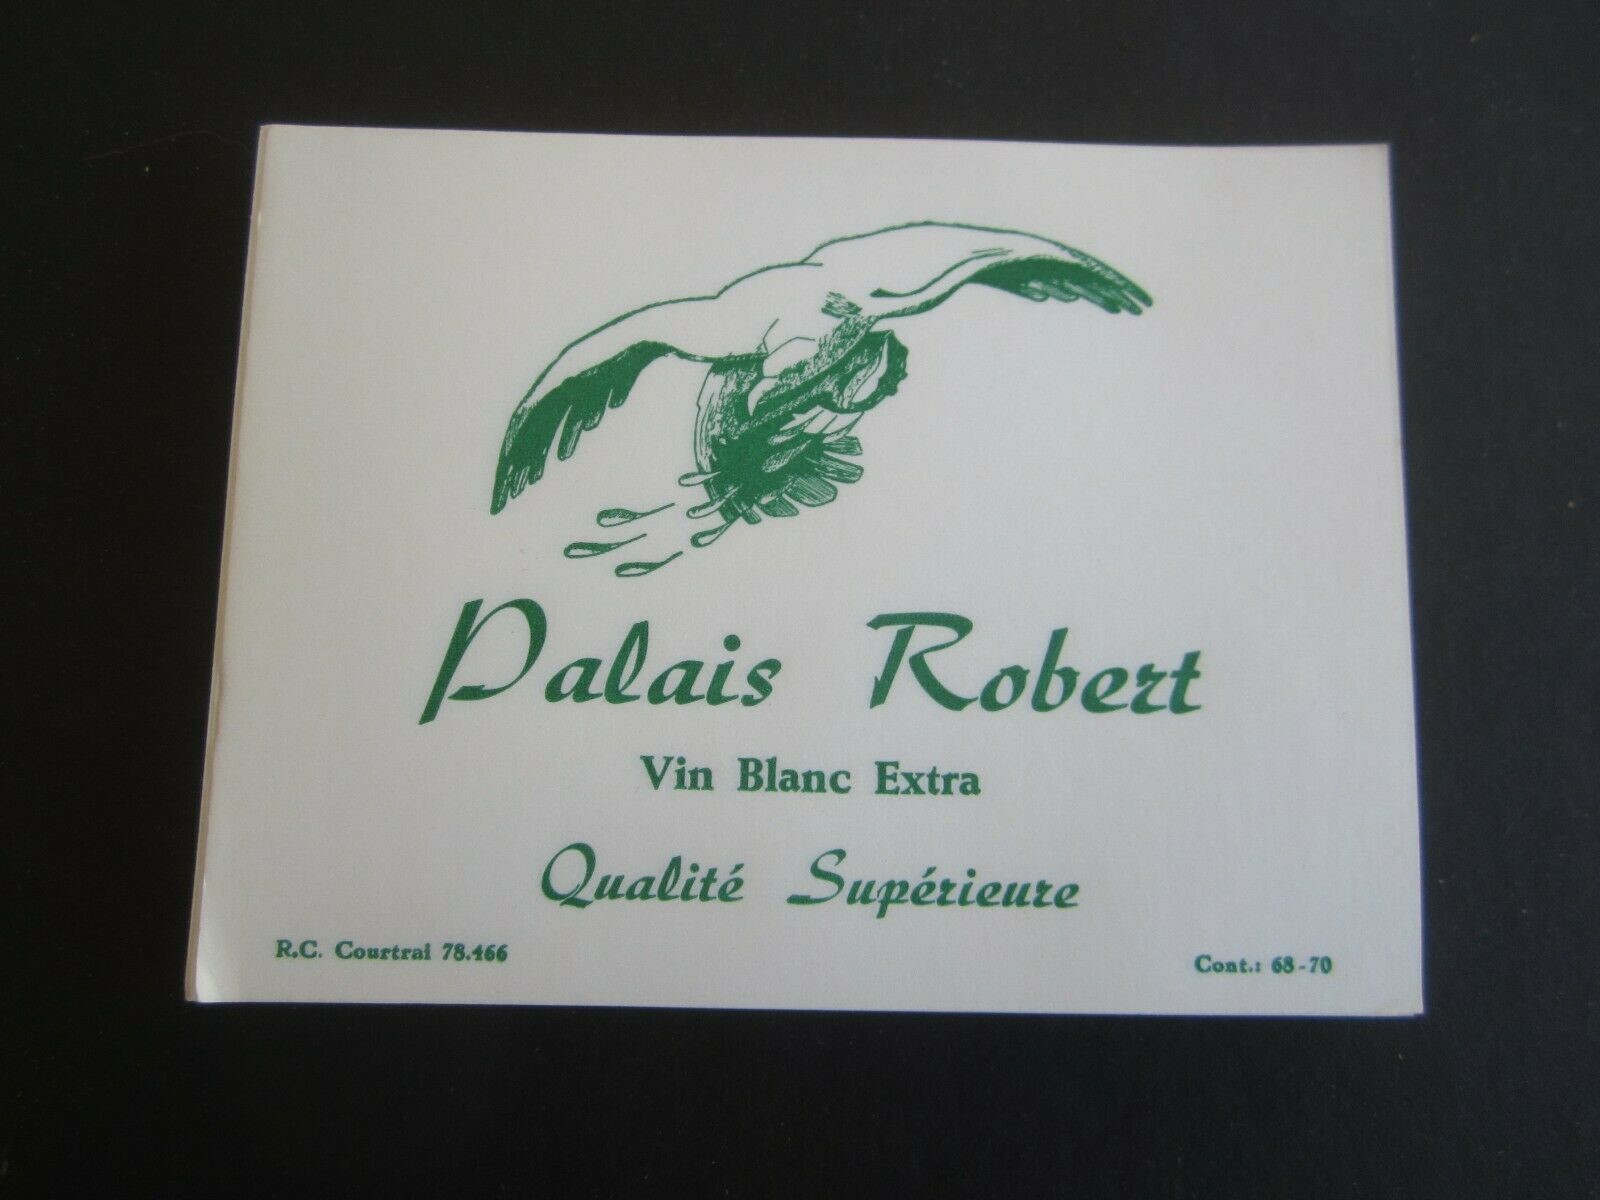  Lot of 100 Old Vintage - PALAIS ROBERT - Europ...